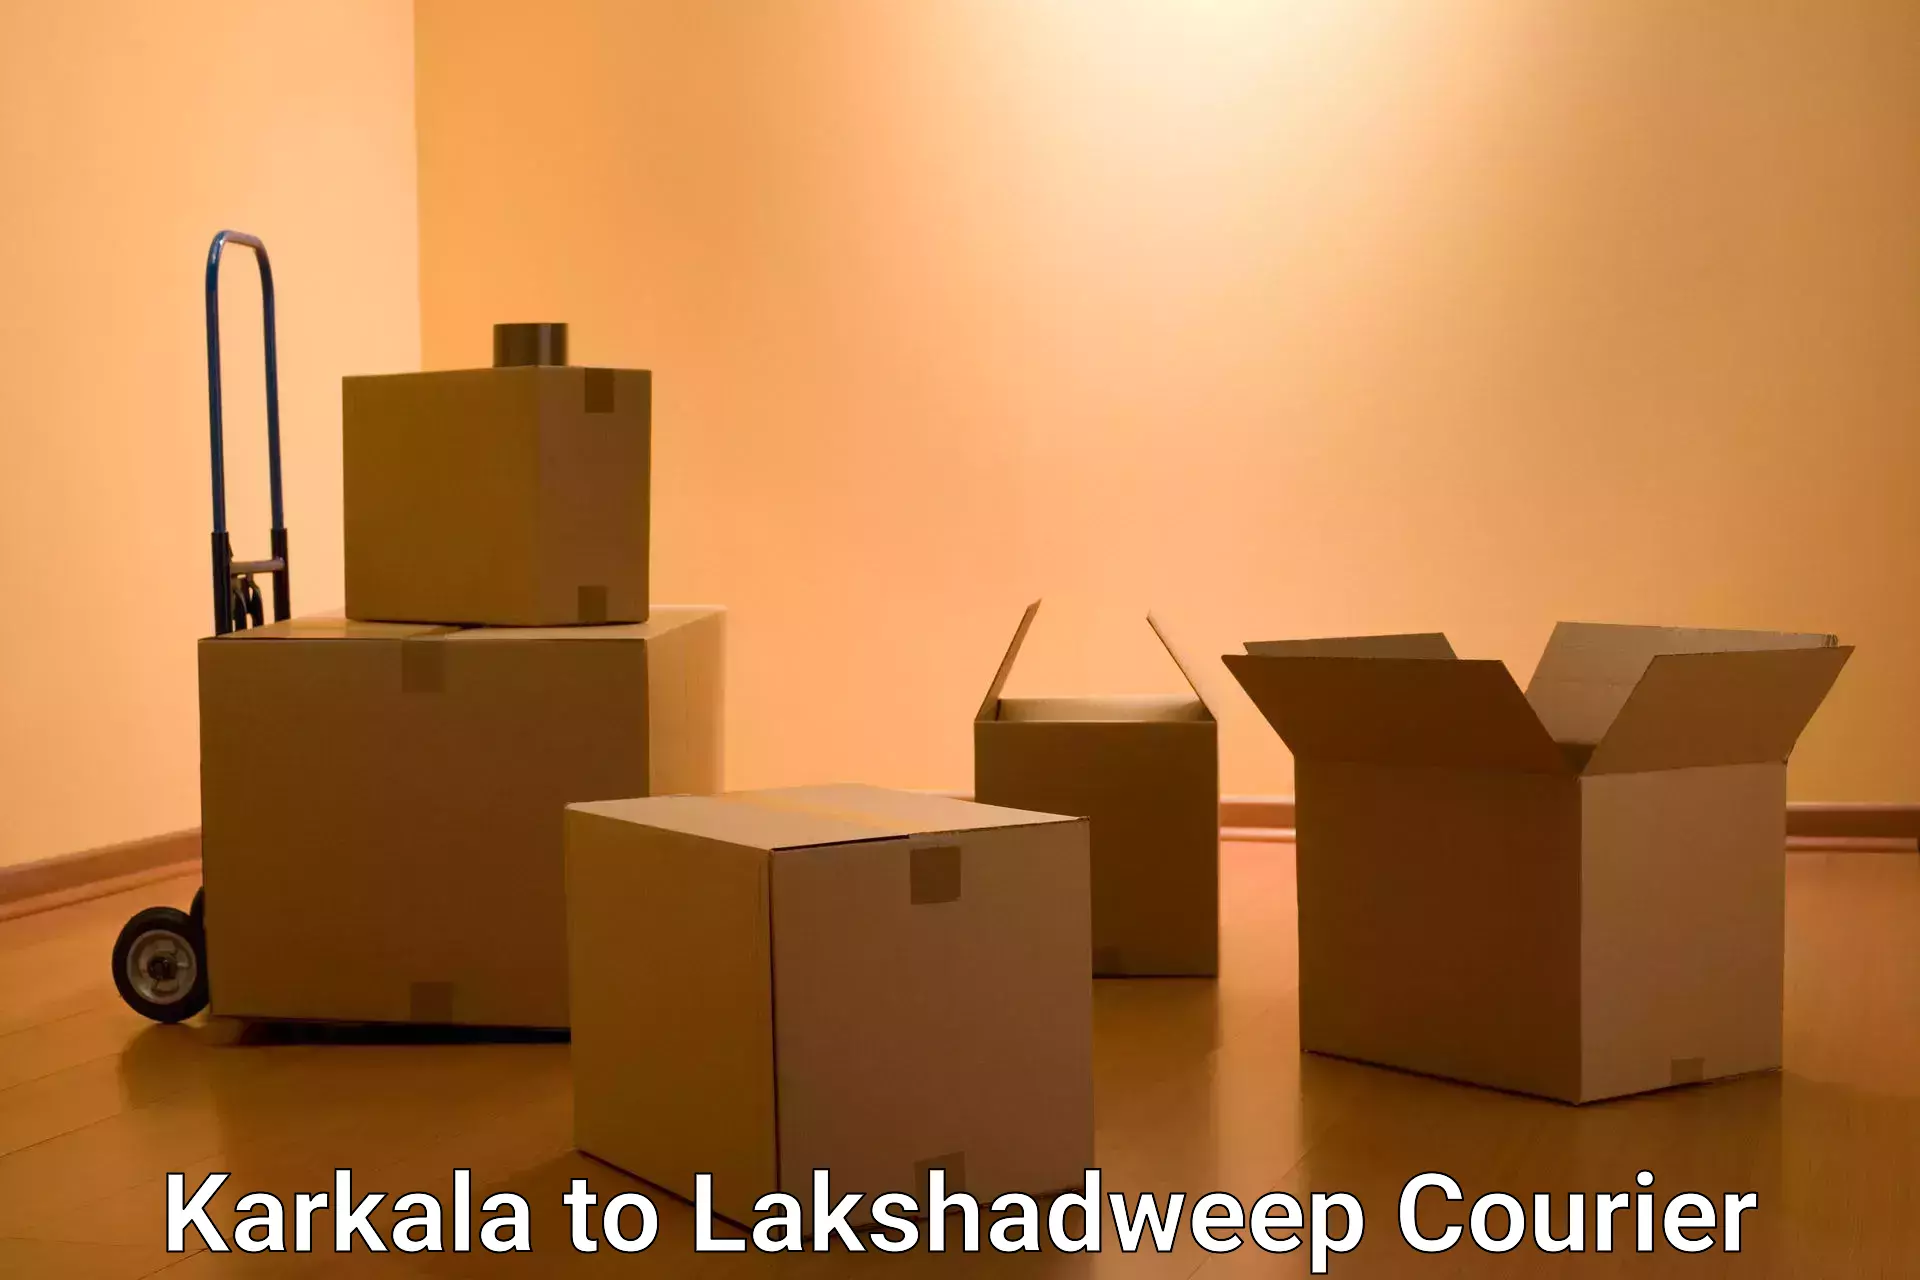 Logistics service provider Karkala to Lakshadweep